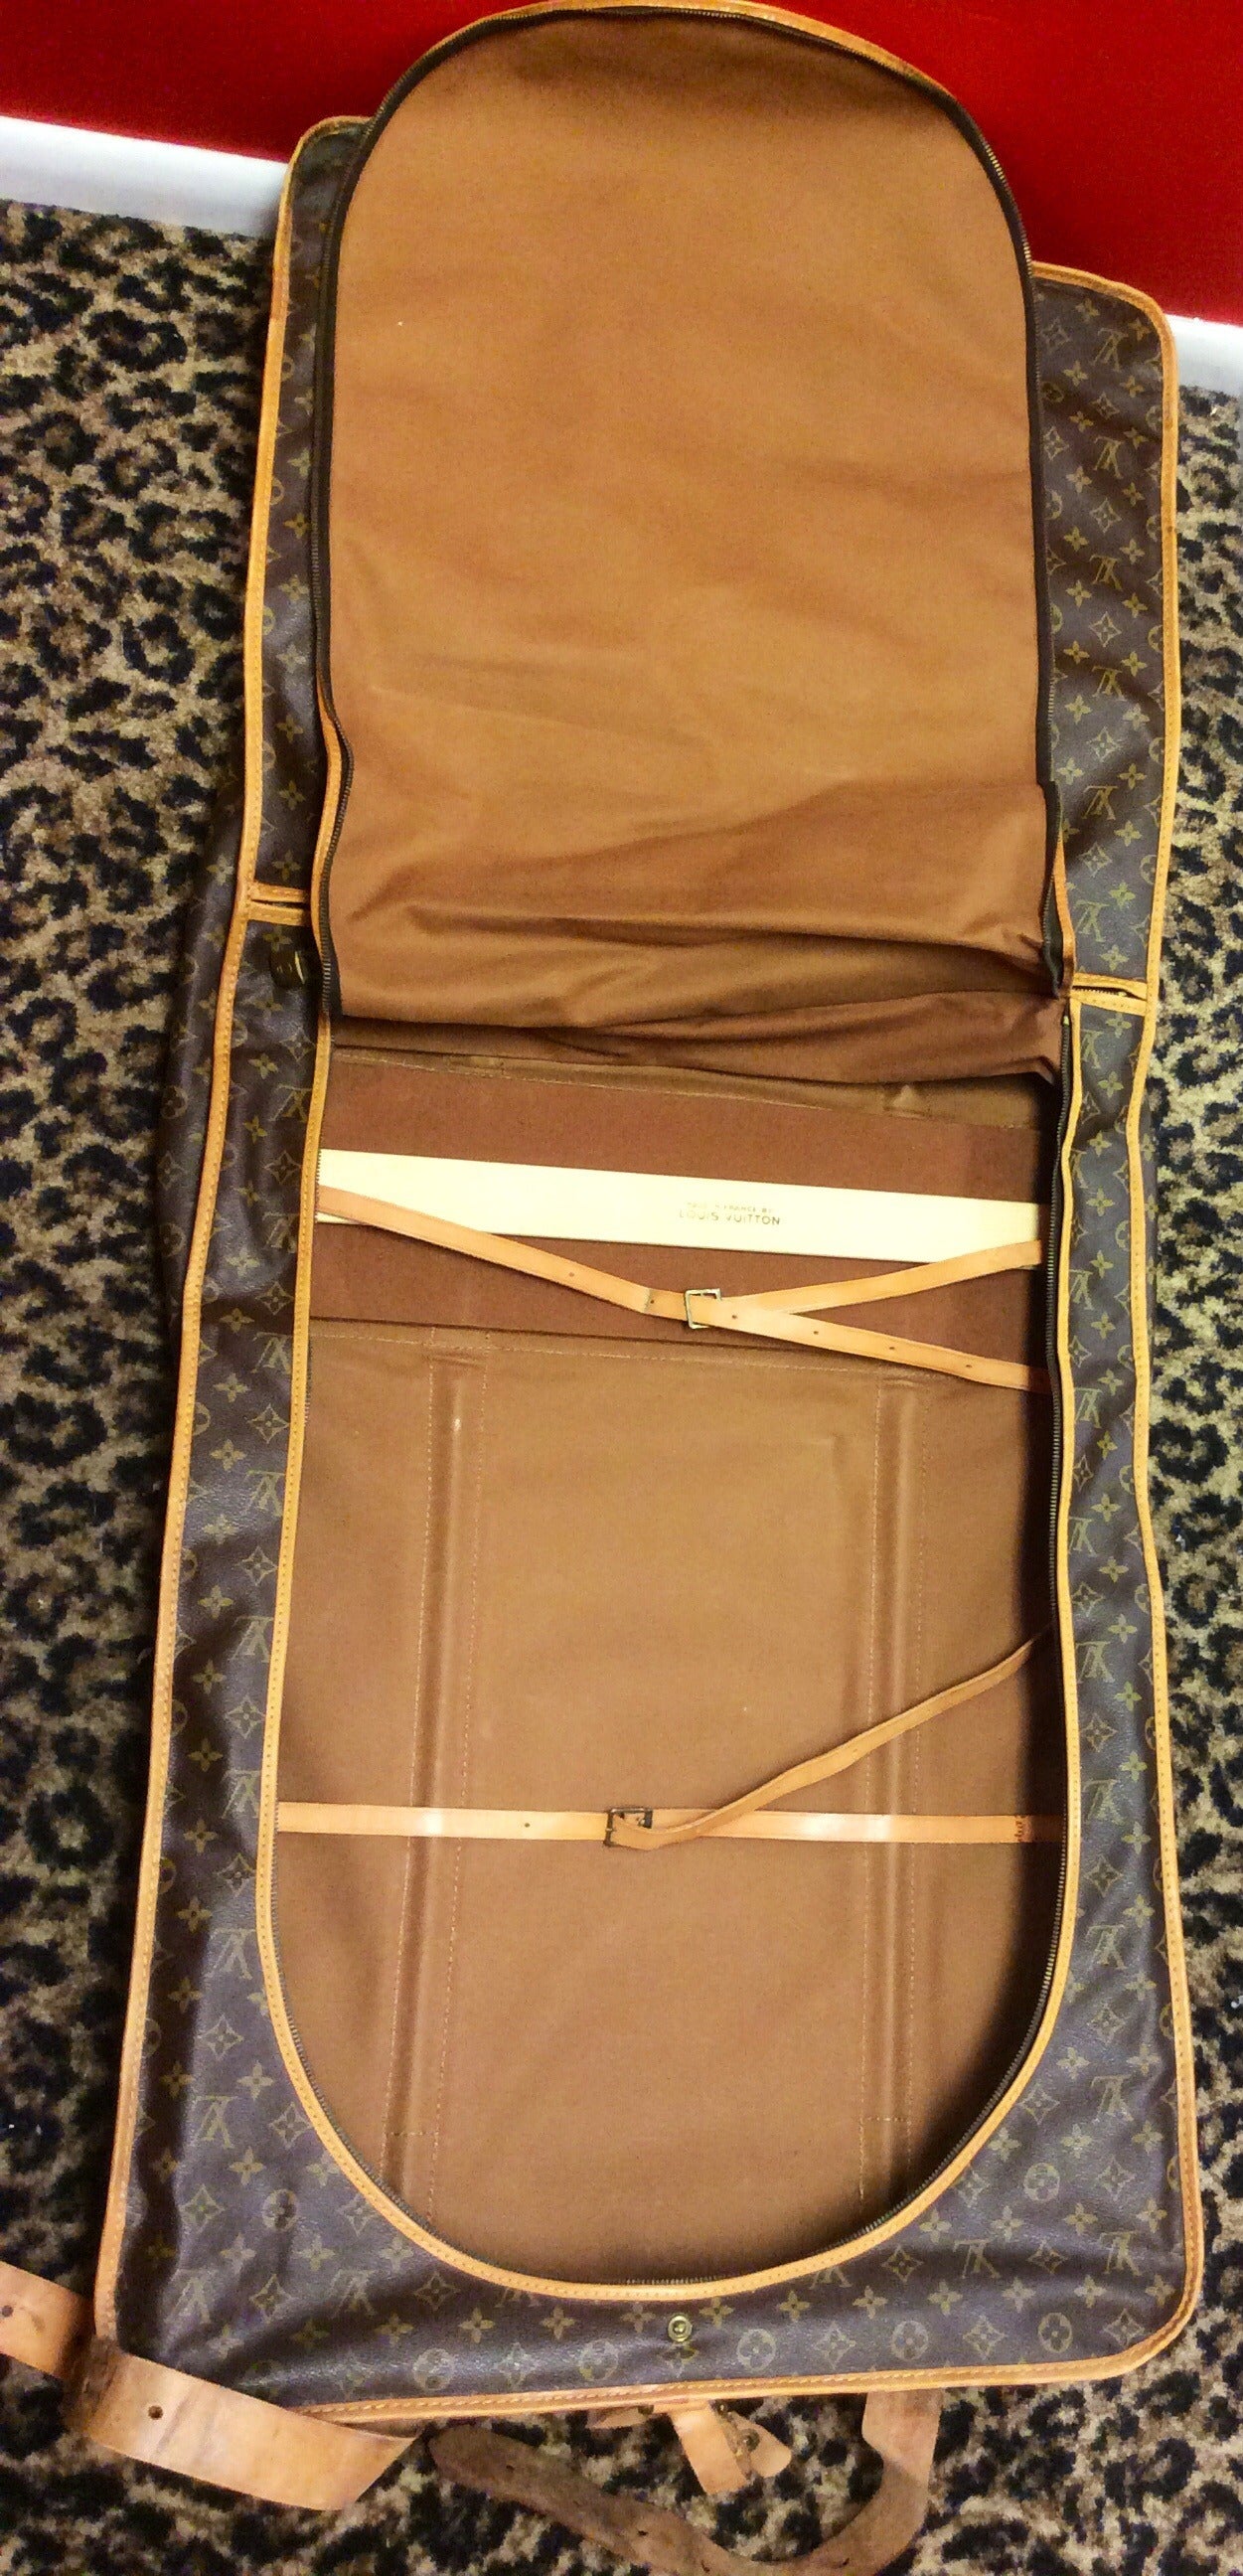 Rare Louis Vuitton Monogram Garment Travel Bag For Sale at 1stdibs